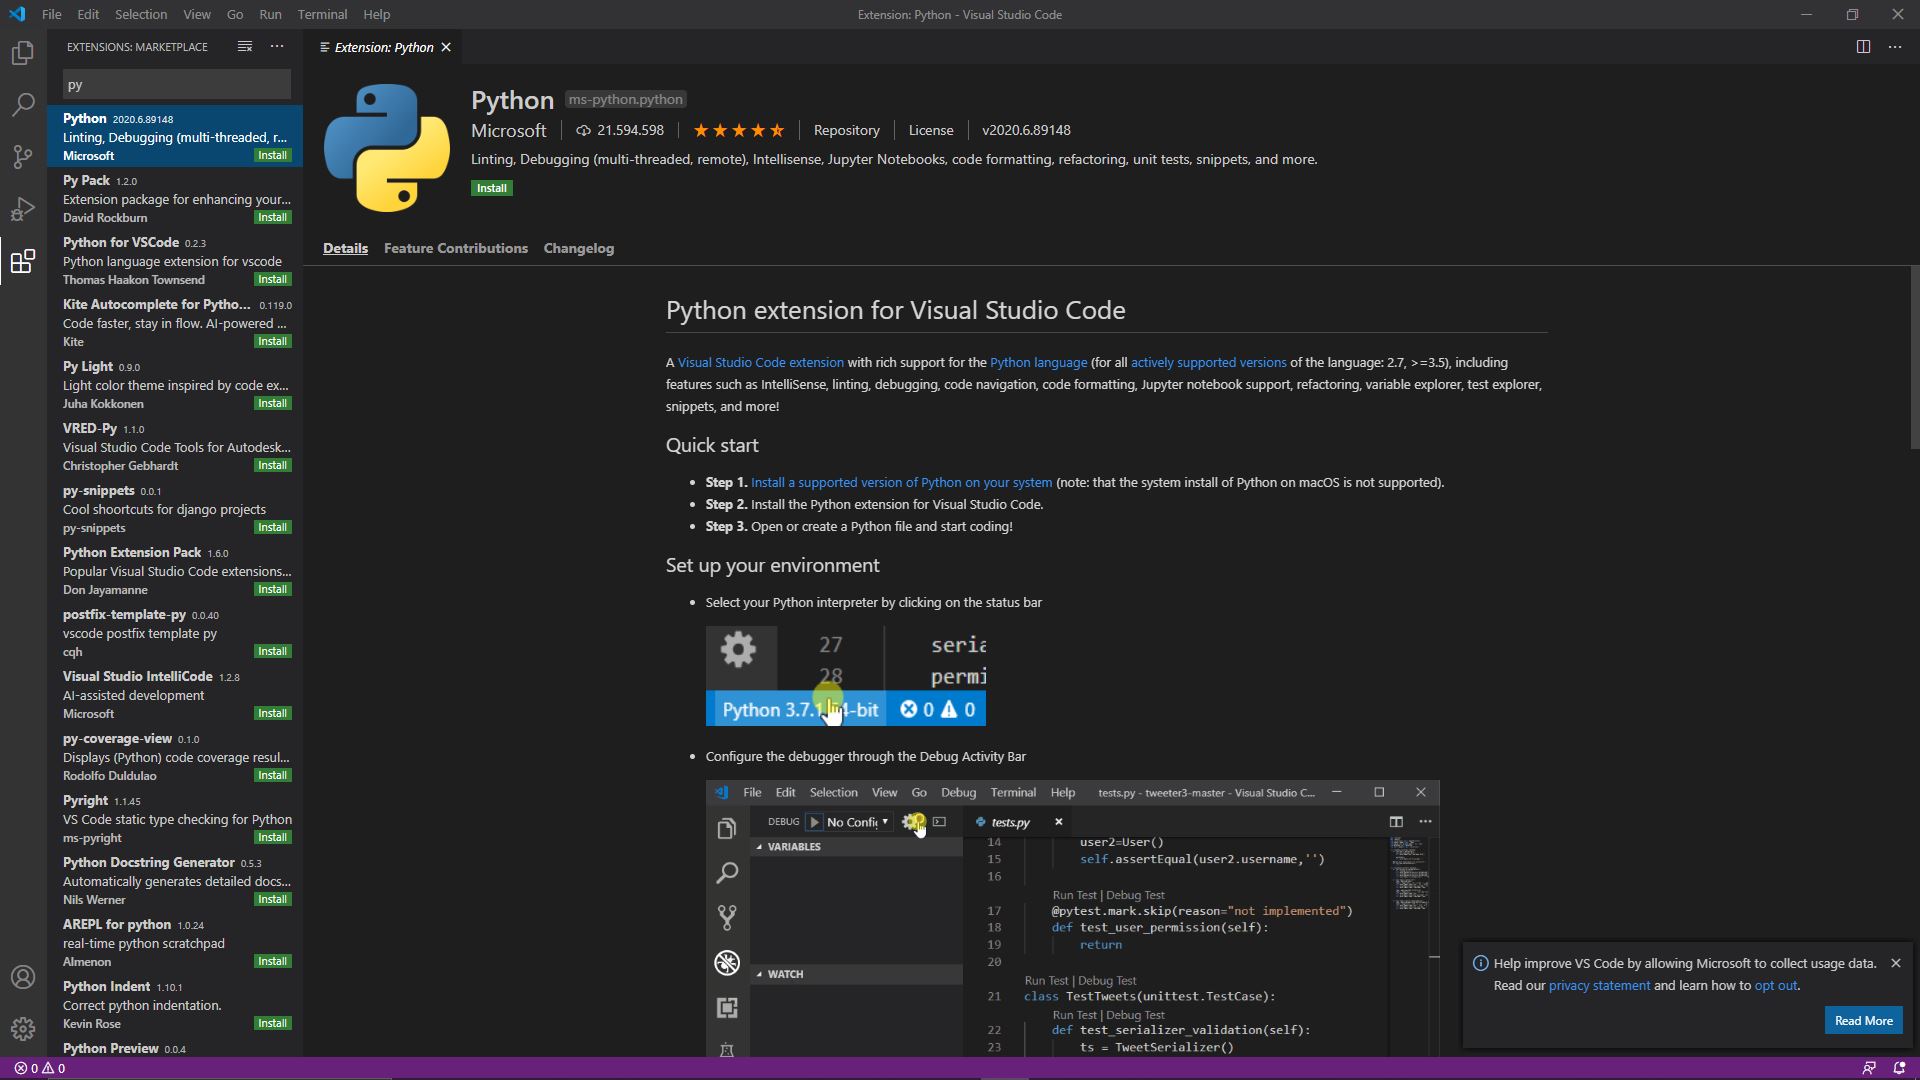 Python extension for Visual Studio Code